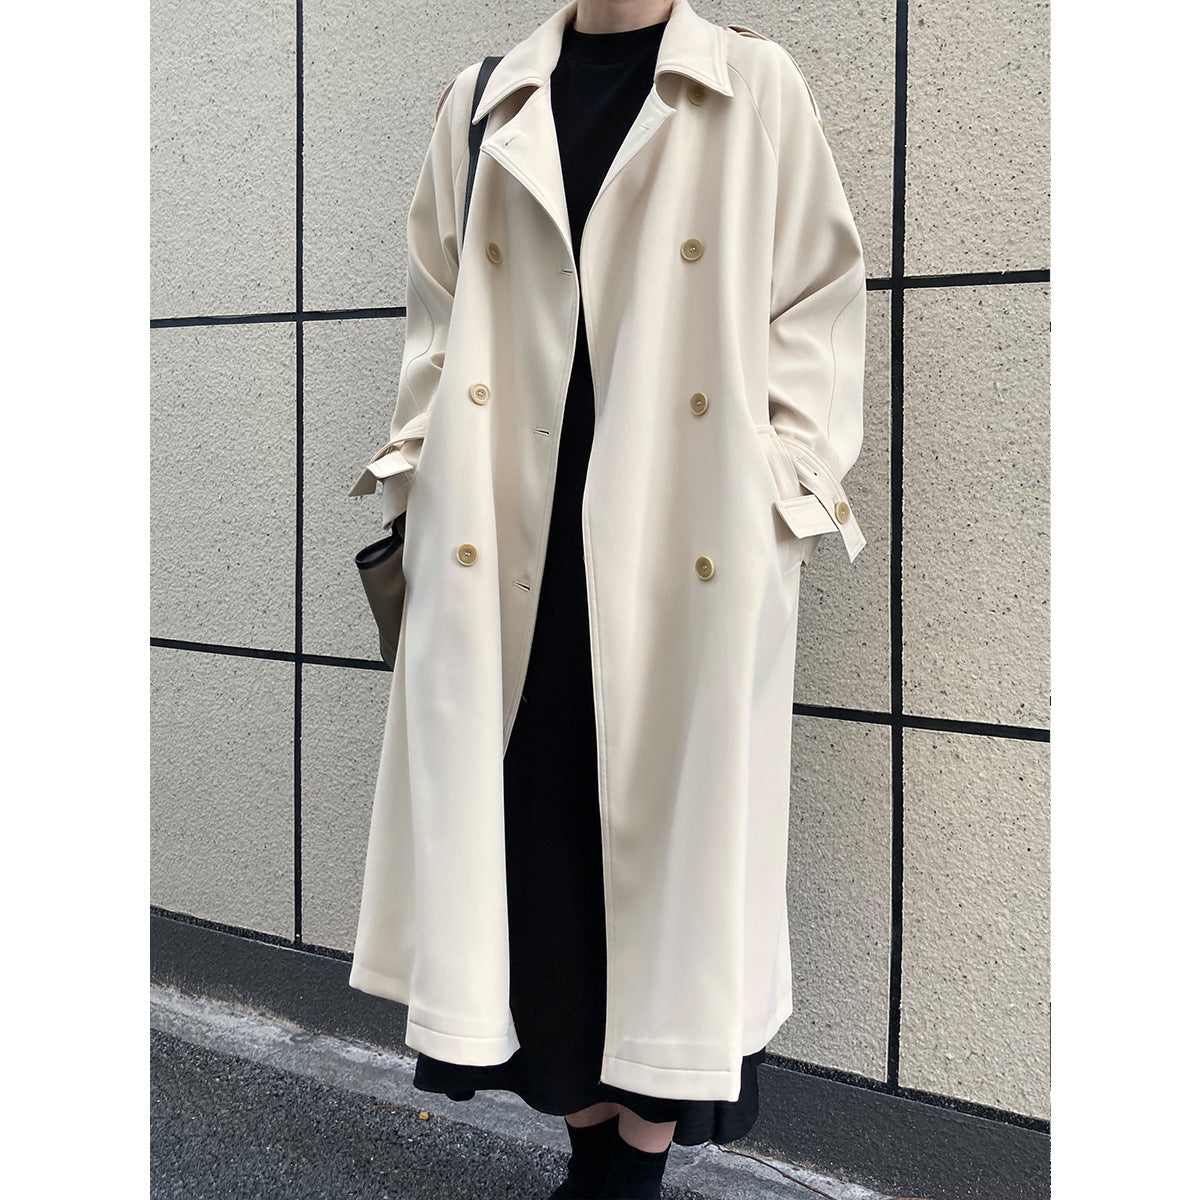 Winter Outfits | Minimalist Chic London Overcoat